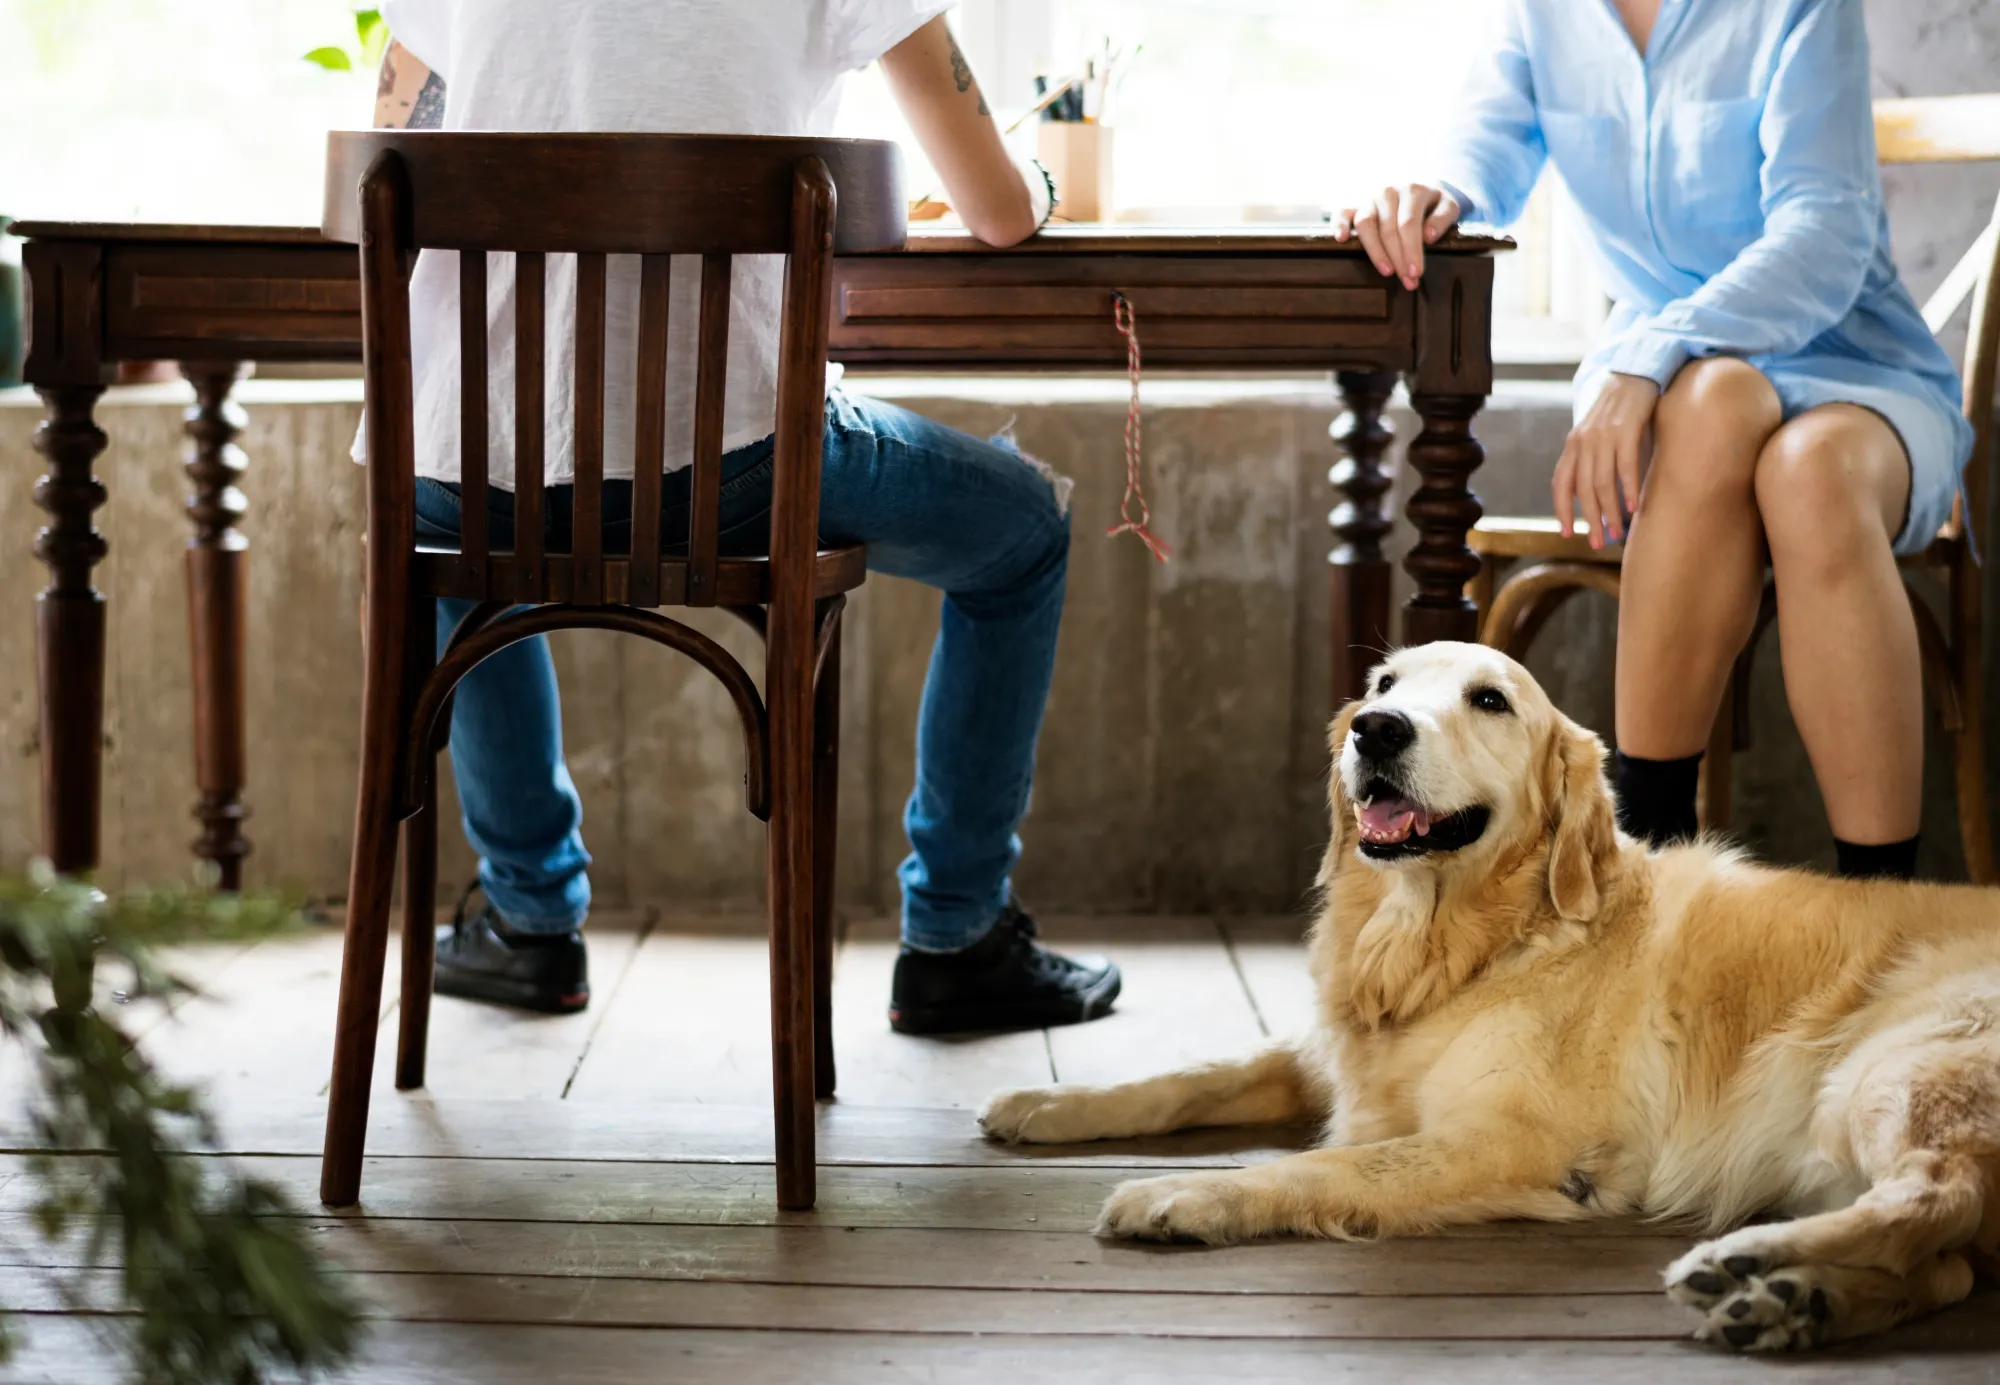 Dog's Social Behavior and Loyalty